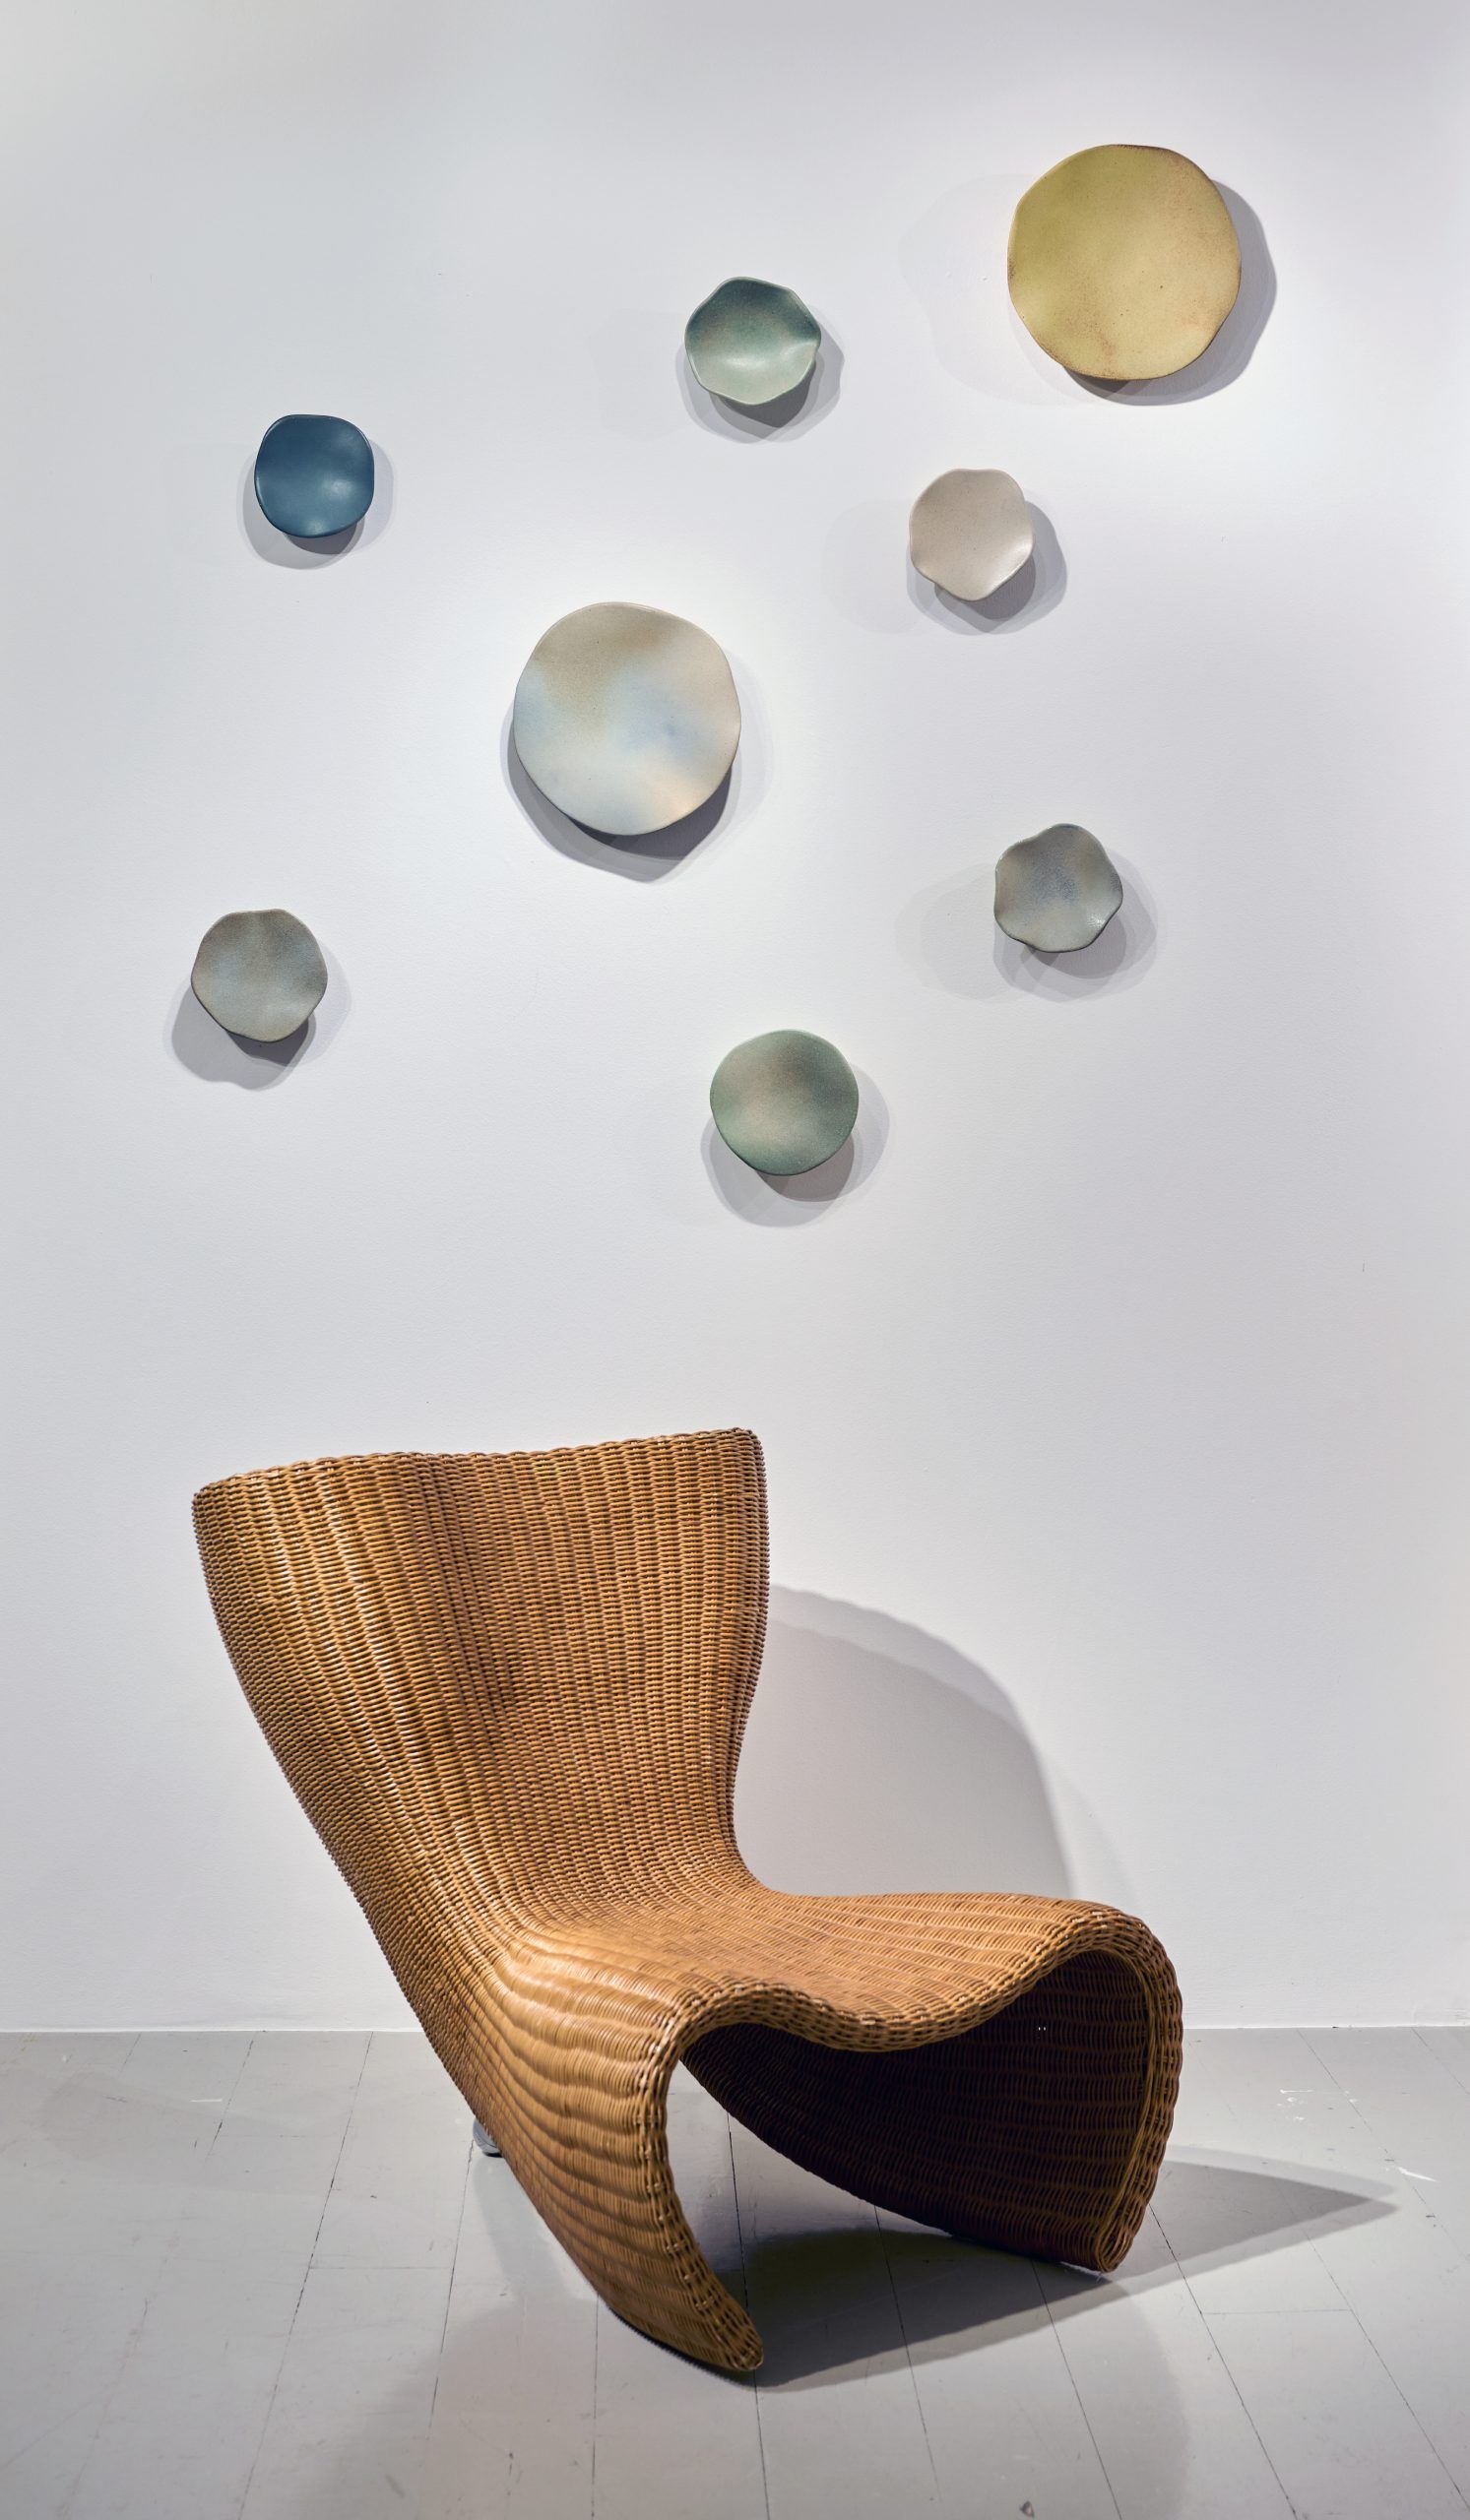 © Abel Zavala Genesis Spores and Marc Newson Wicker Chair courtesy ammann gallery